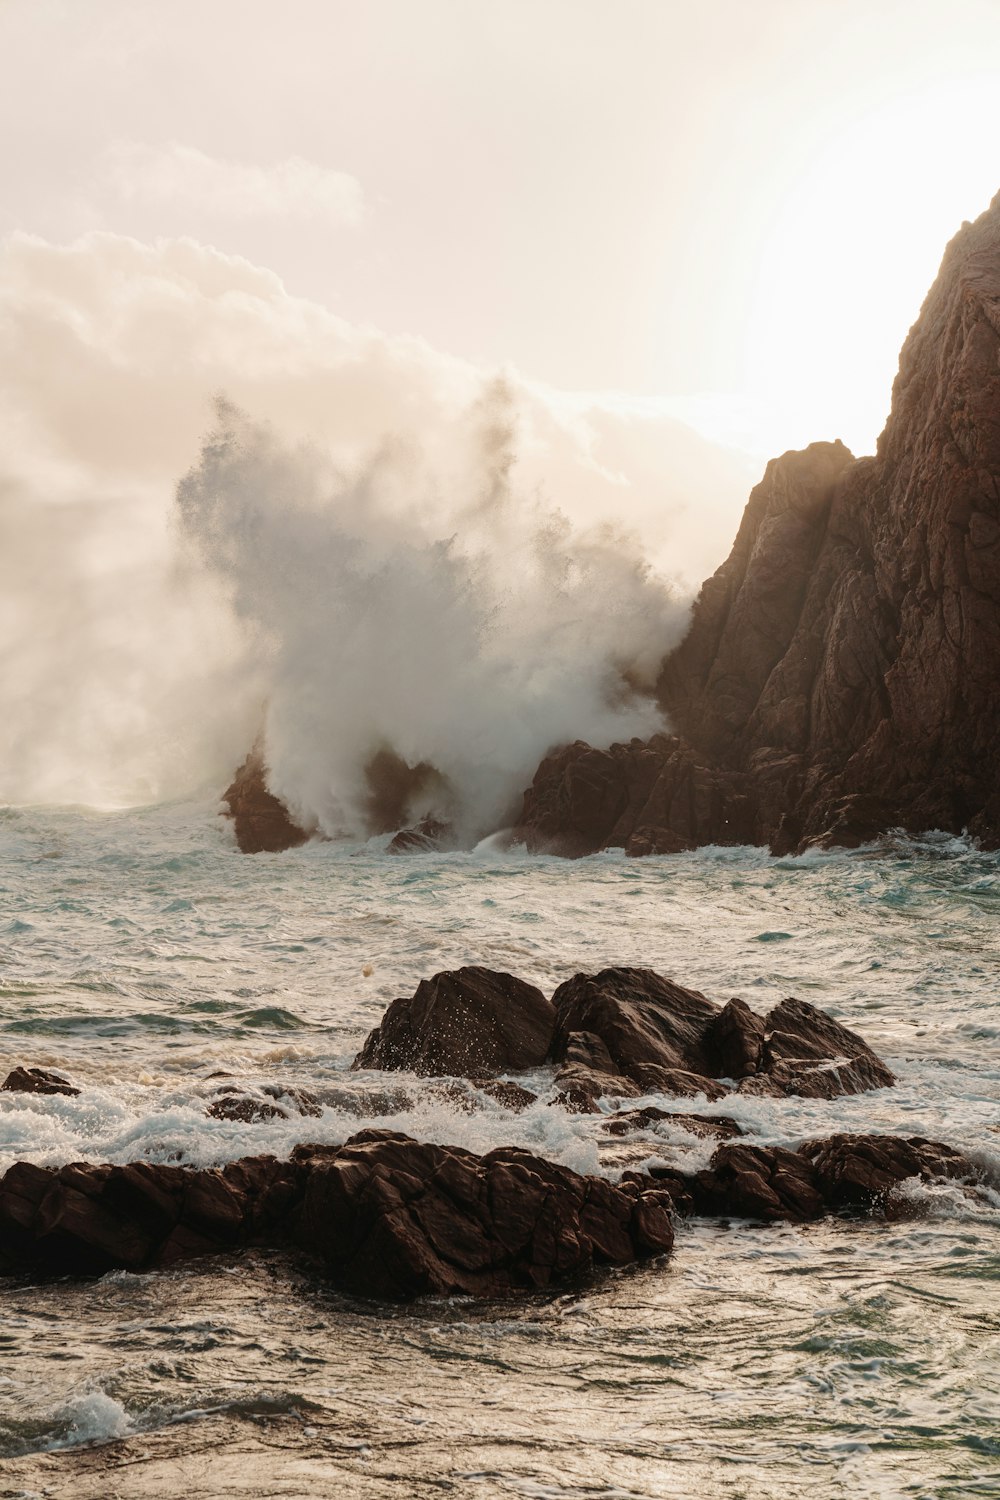 waves crashing against rocks